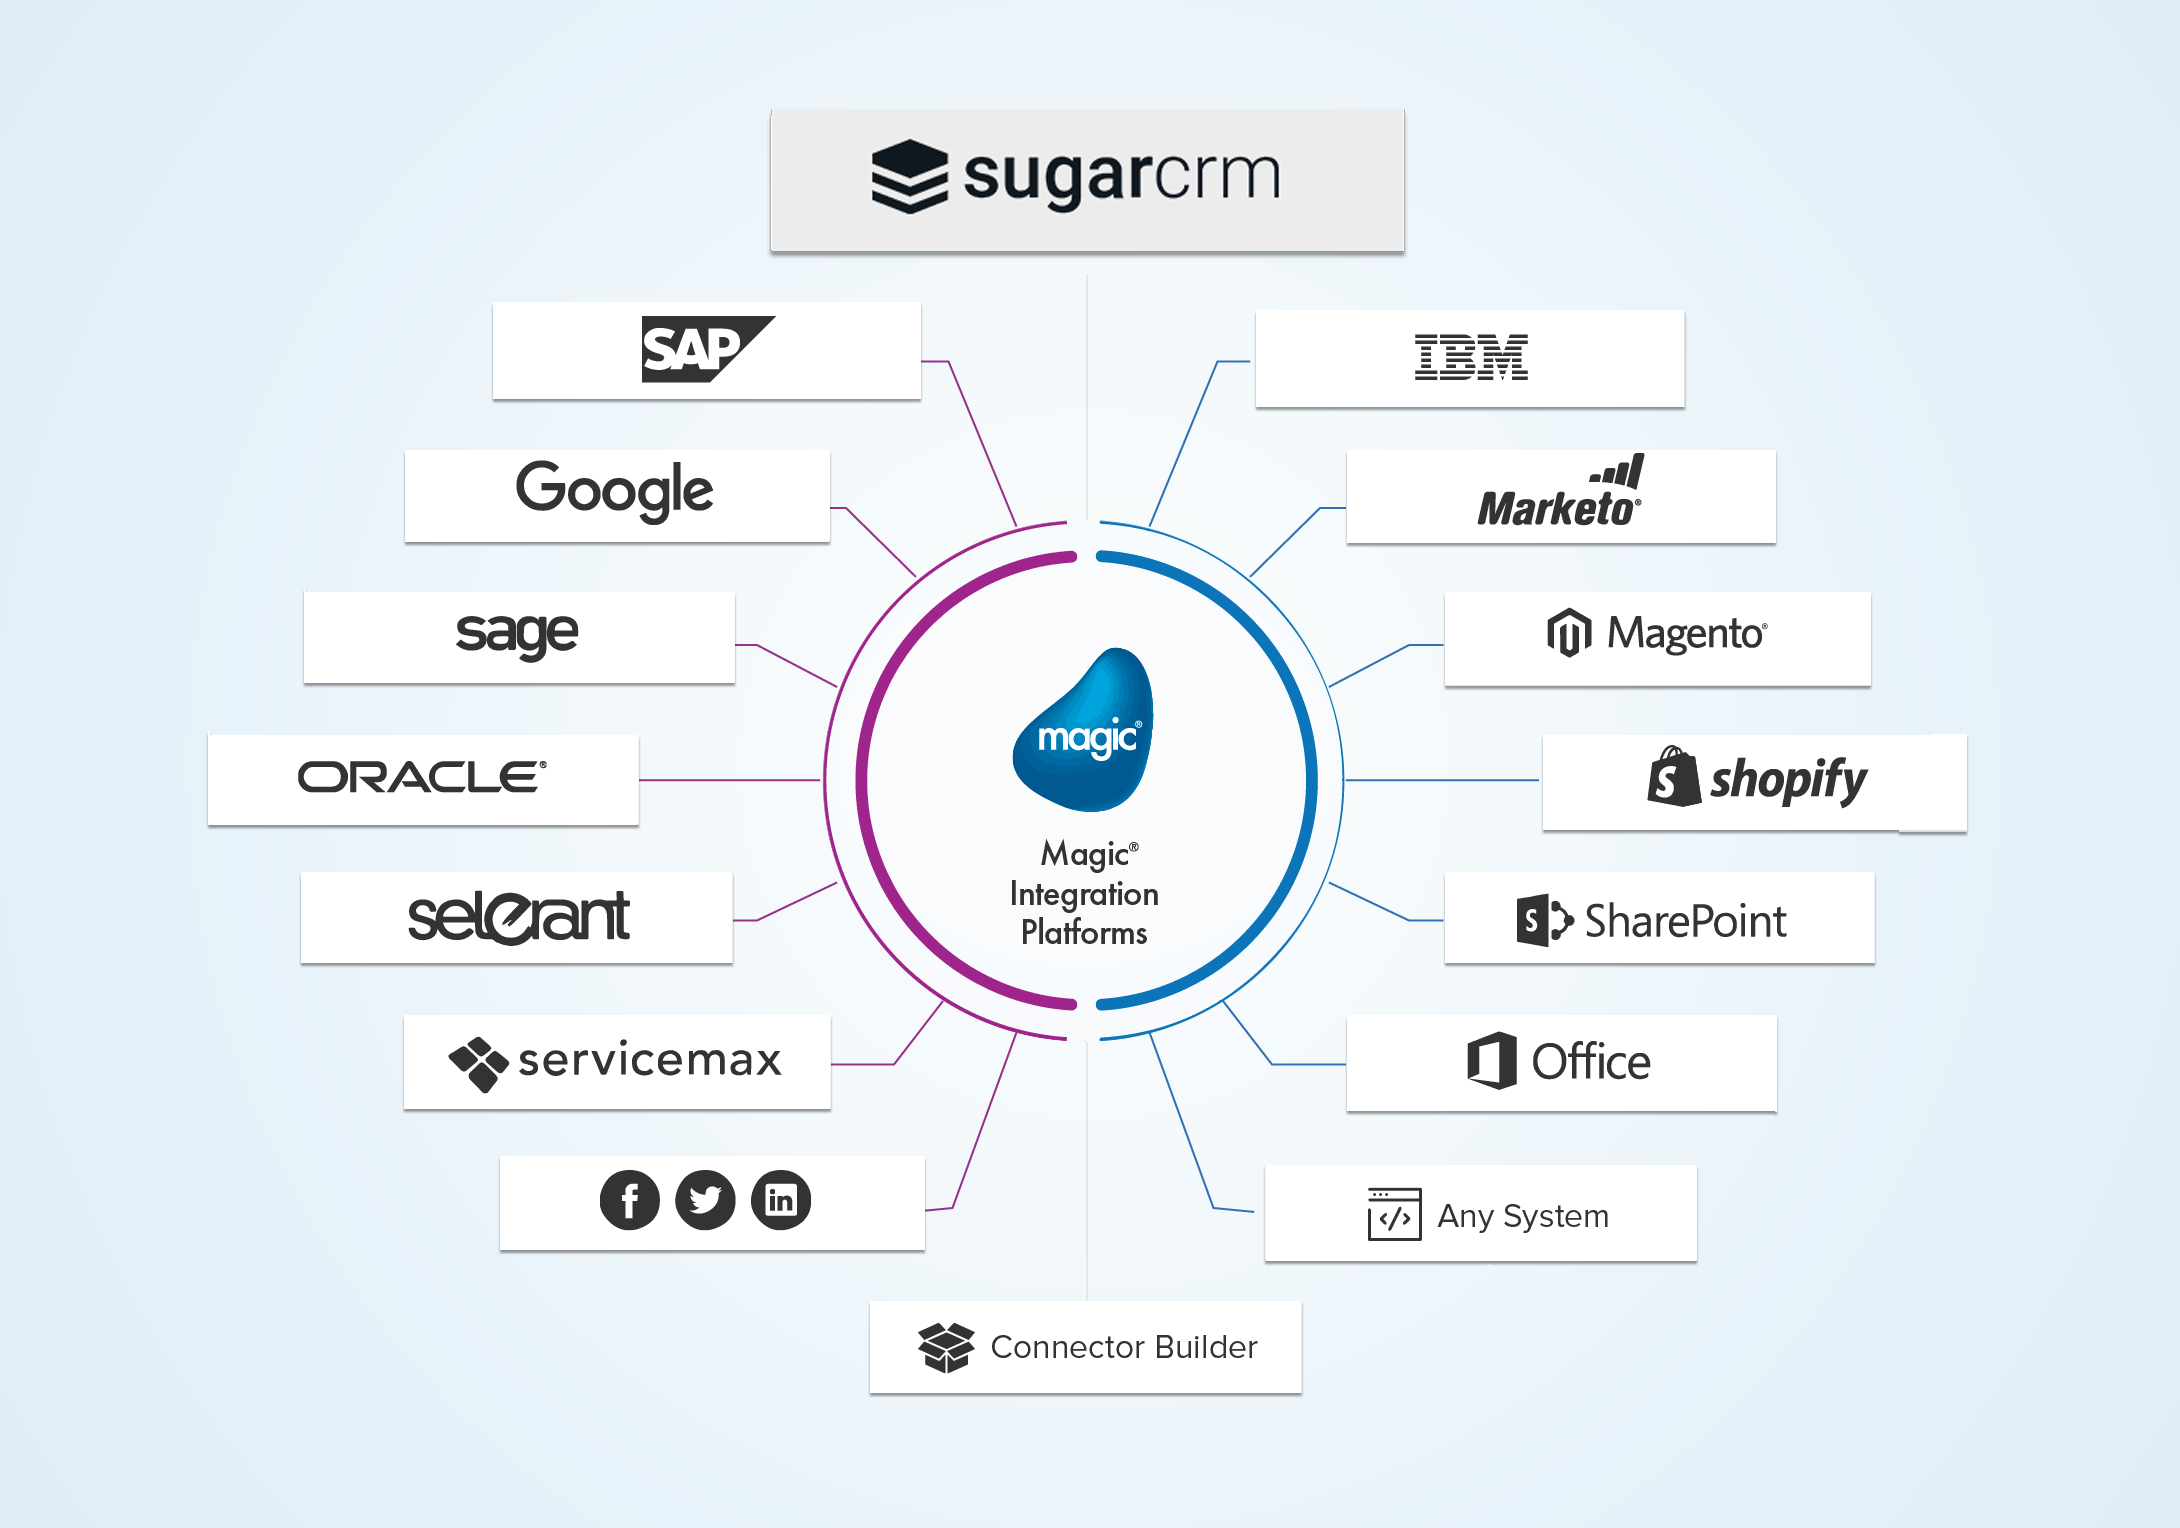 Magic xpi Integration Platform connecting SugarcRM, SAP, Google, sage, Oracle, selerant, servicemax, social media, IBM, Marketo, Magento, shopify, SharePoint, Office and a Connector Builder